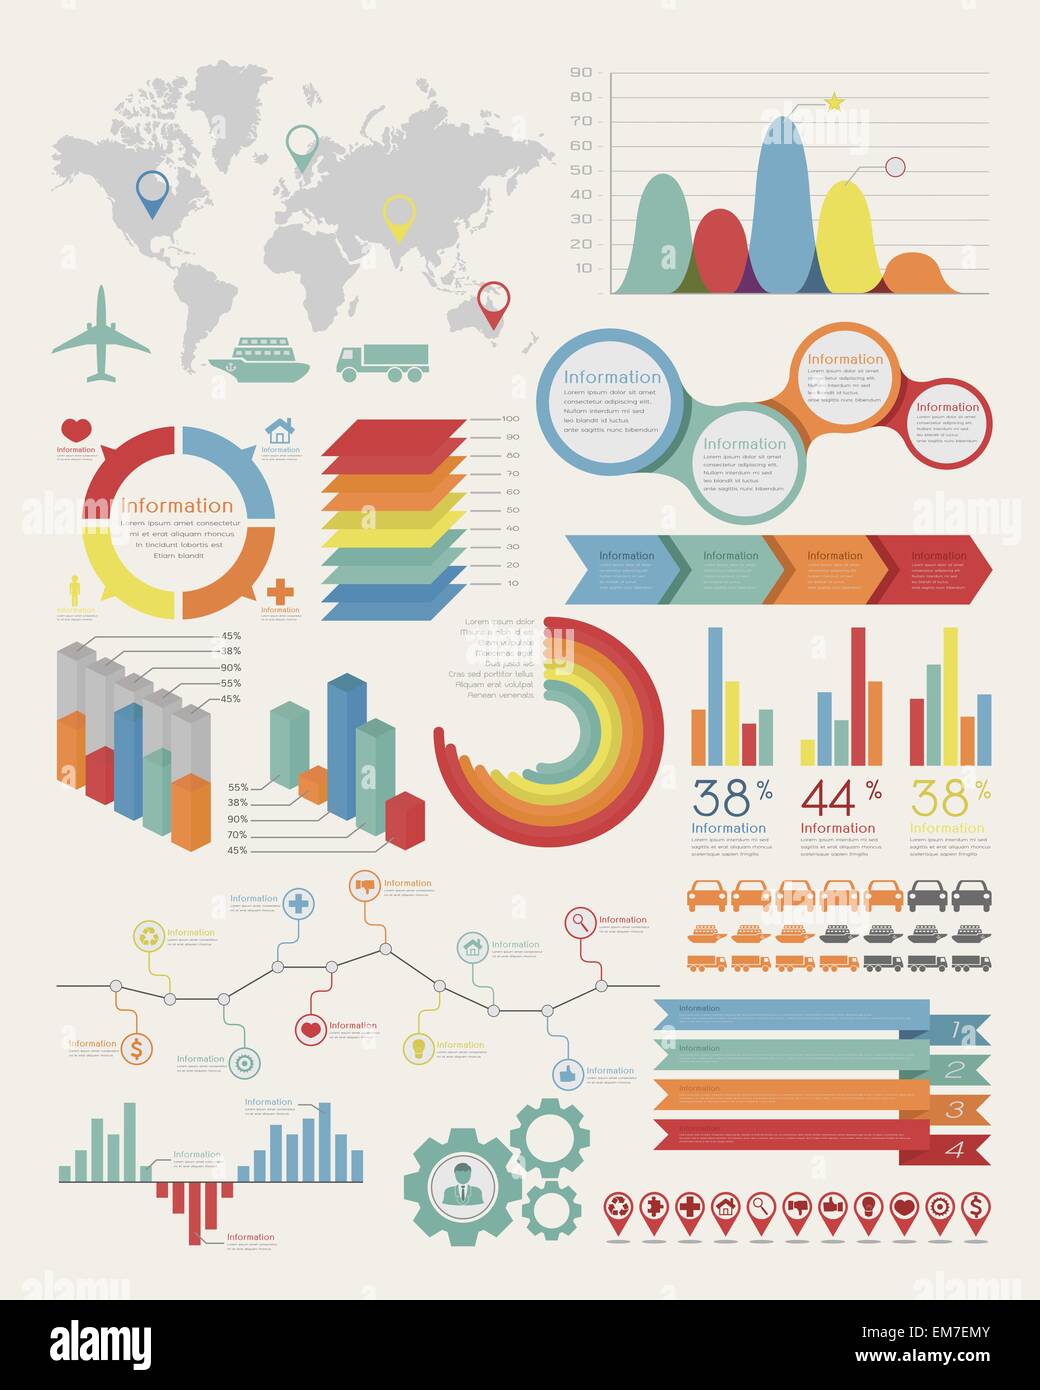 Infographic Elements Stock Vector